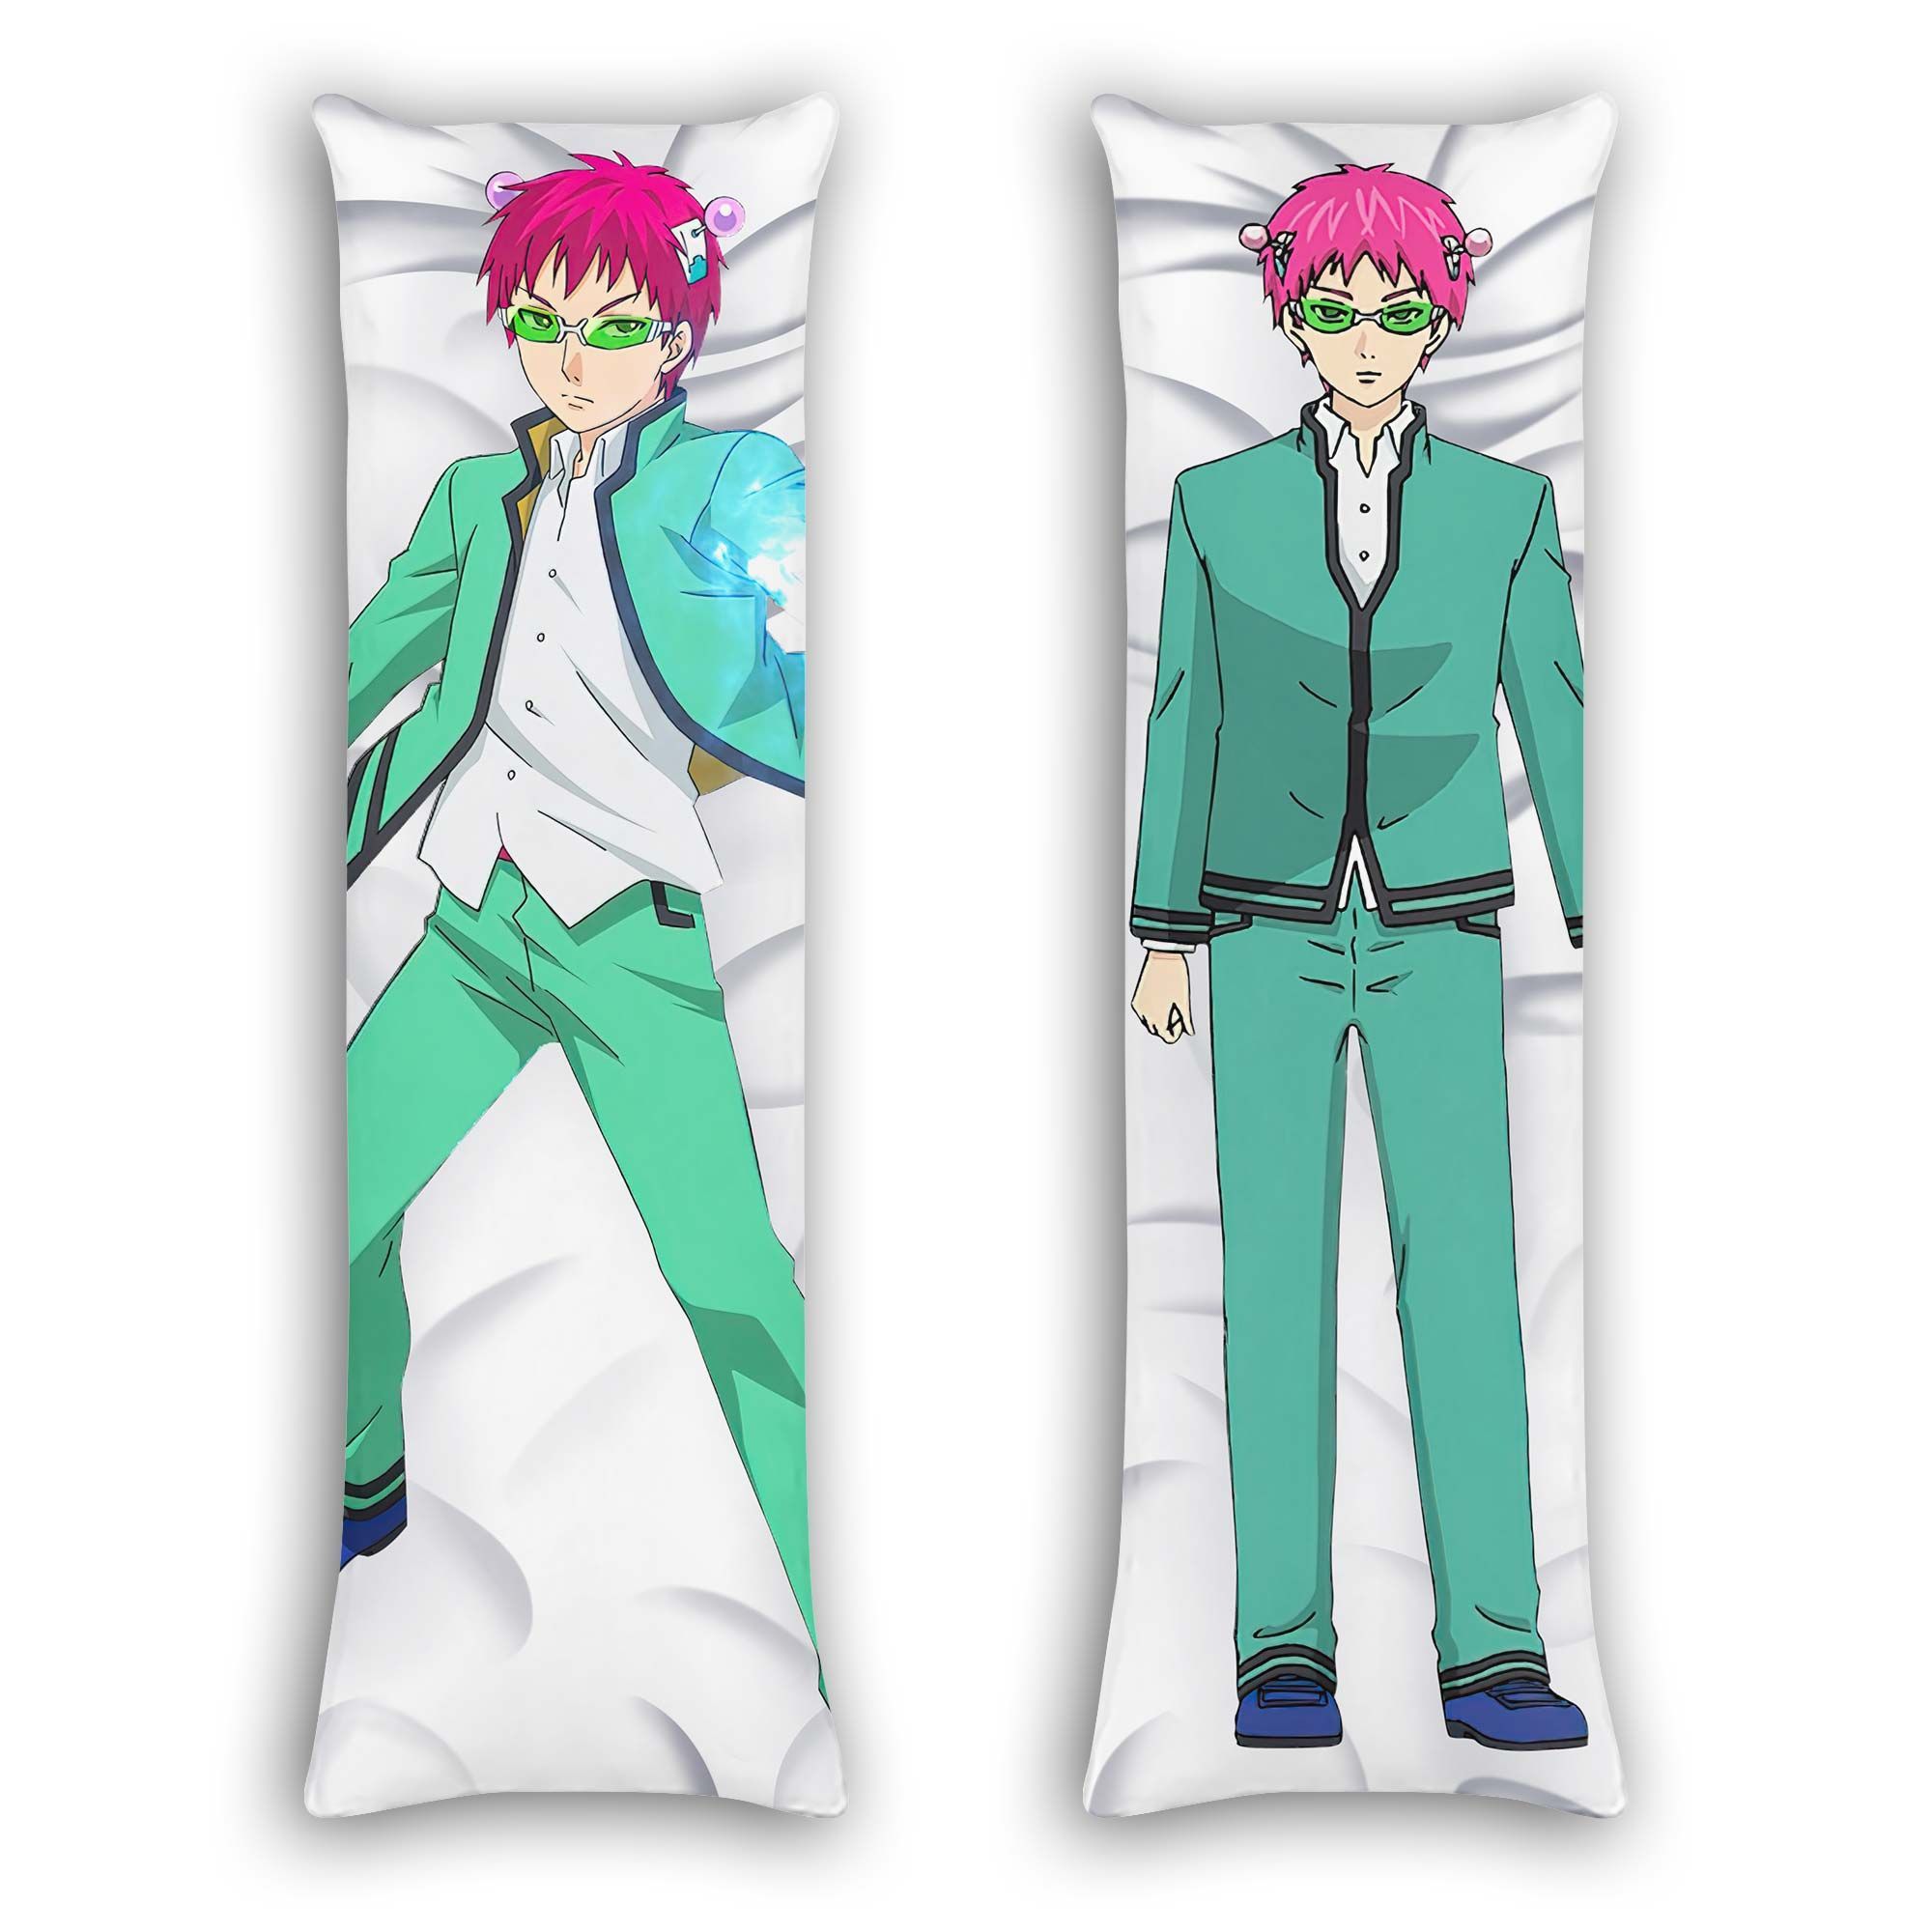 Anime Body Pillow – The Perfect Anime Body Pillow Gift